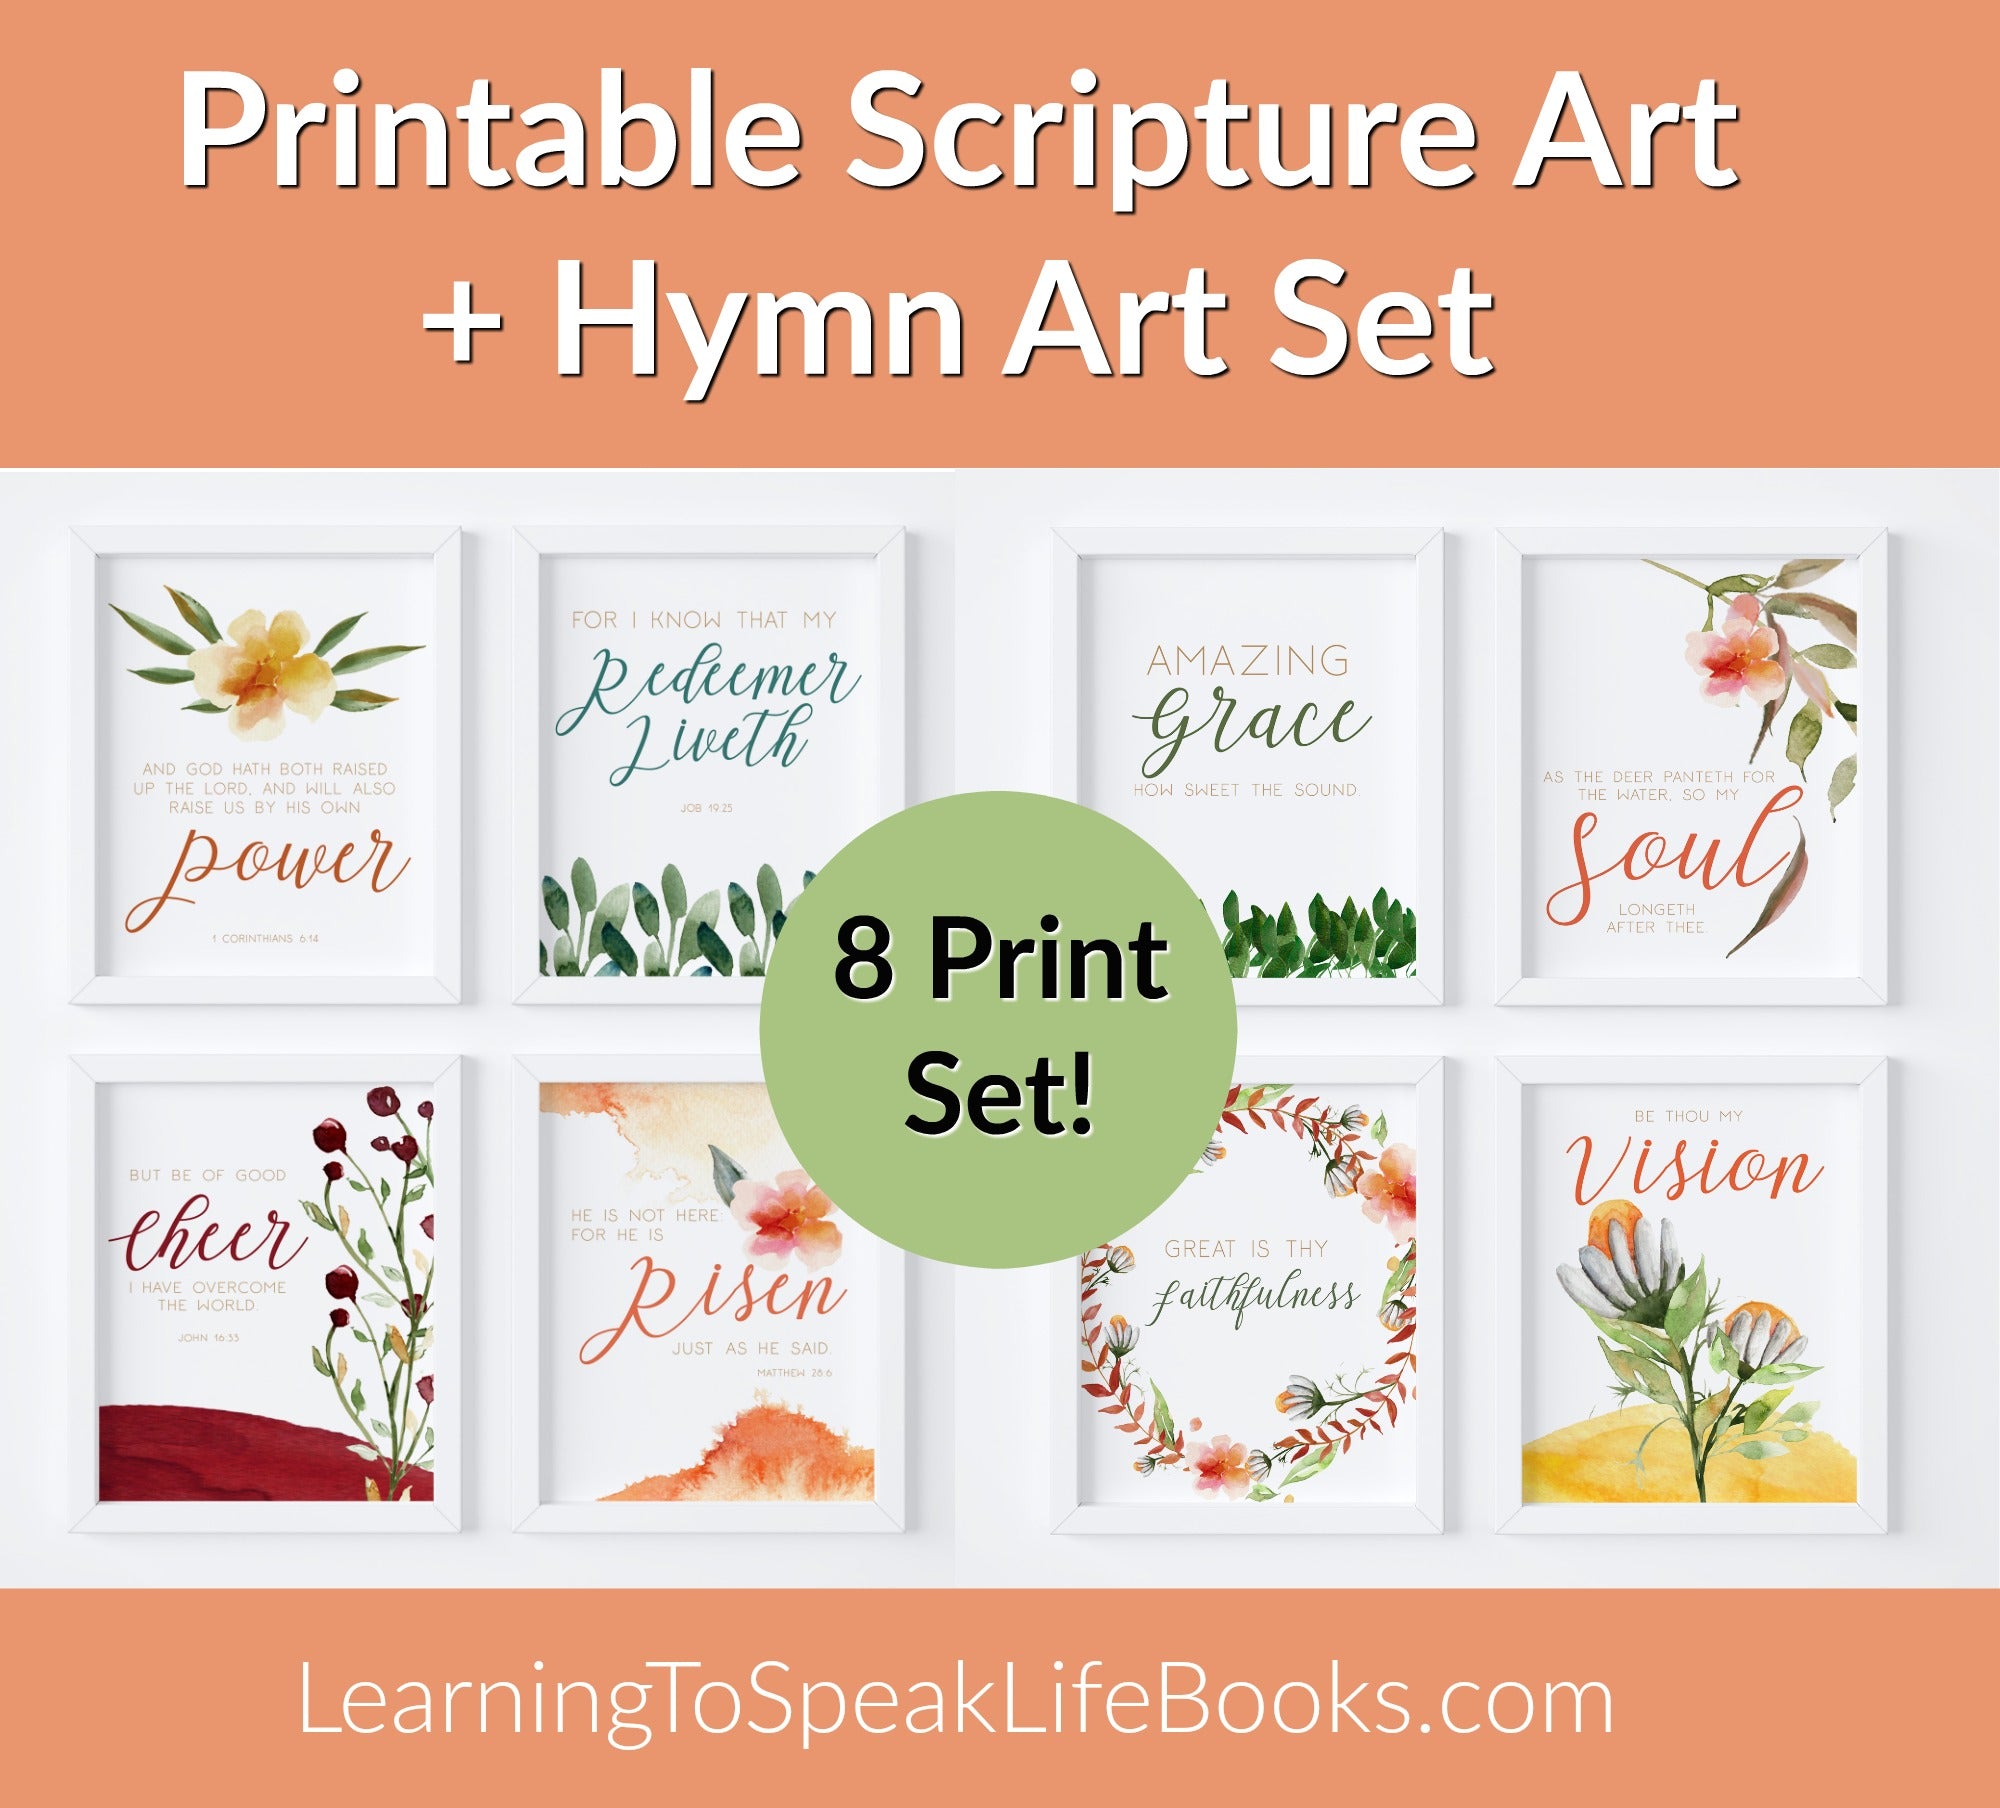 [Printable] Easter-Themed Scripture + Hymn Art Set